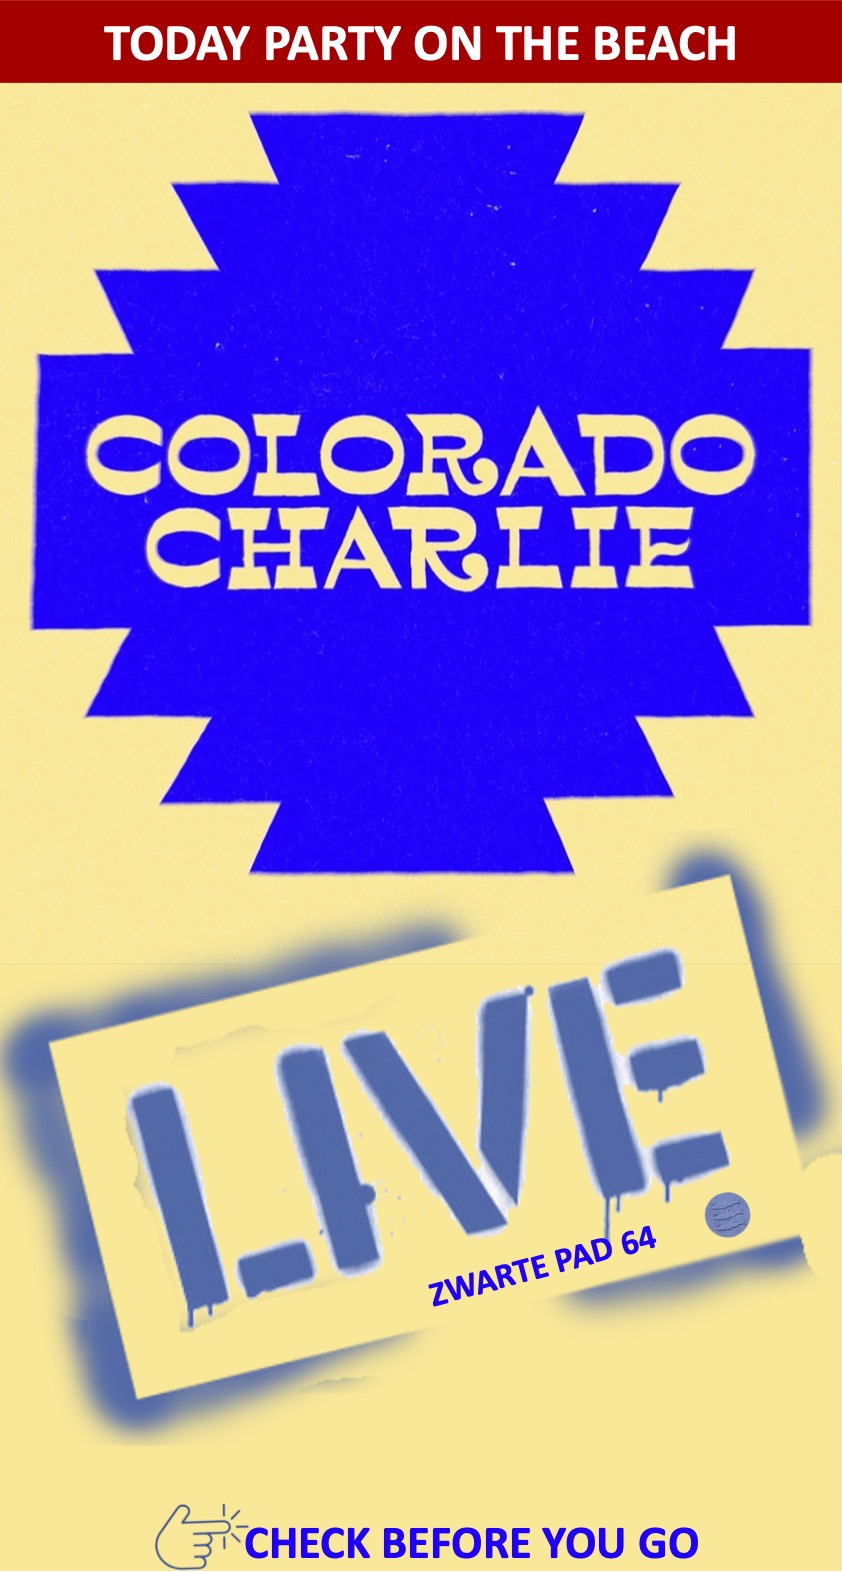 Colorado Charlie Beachclub Zwarte Pad Scheveningen